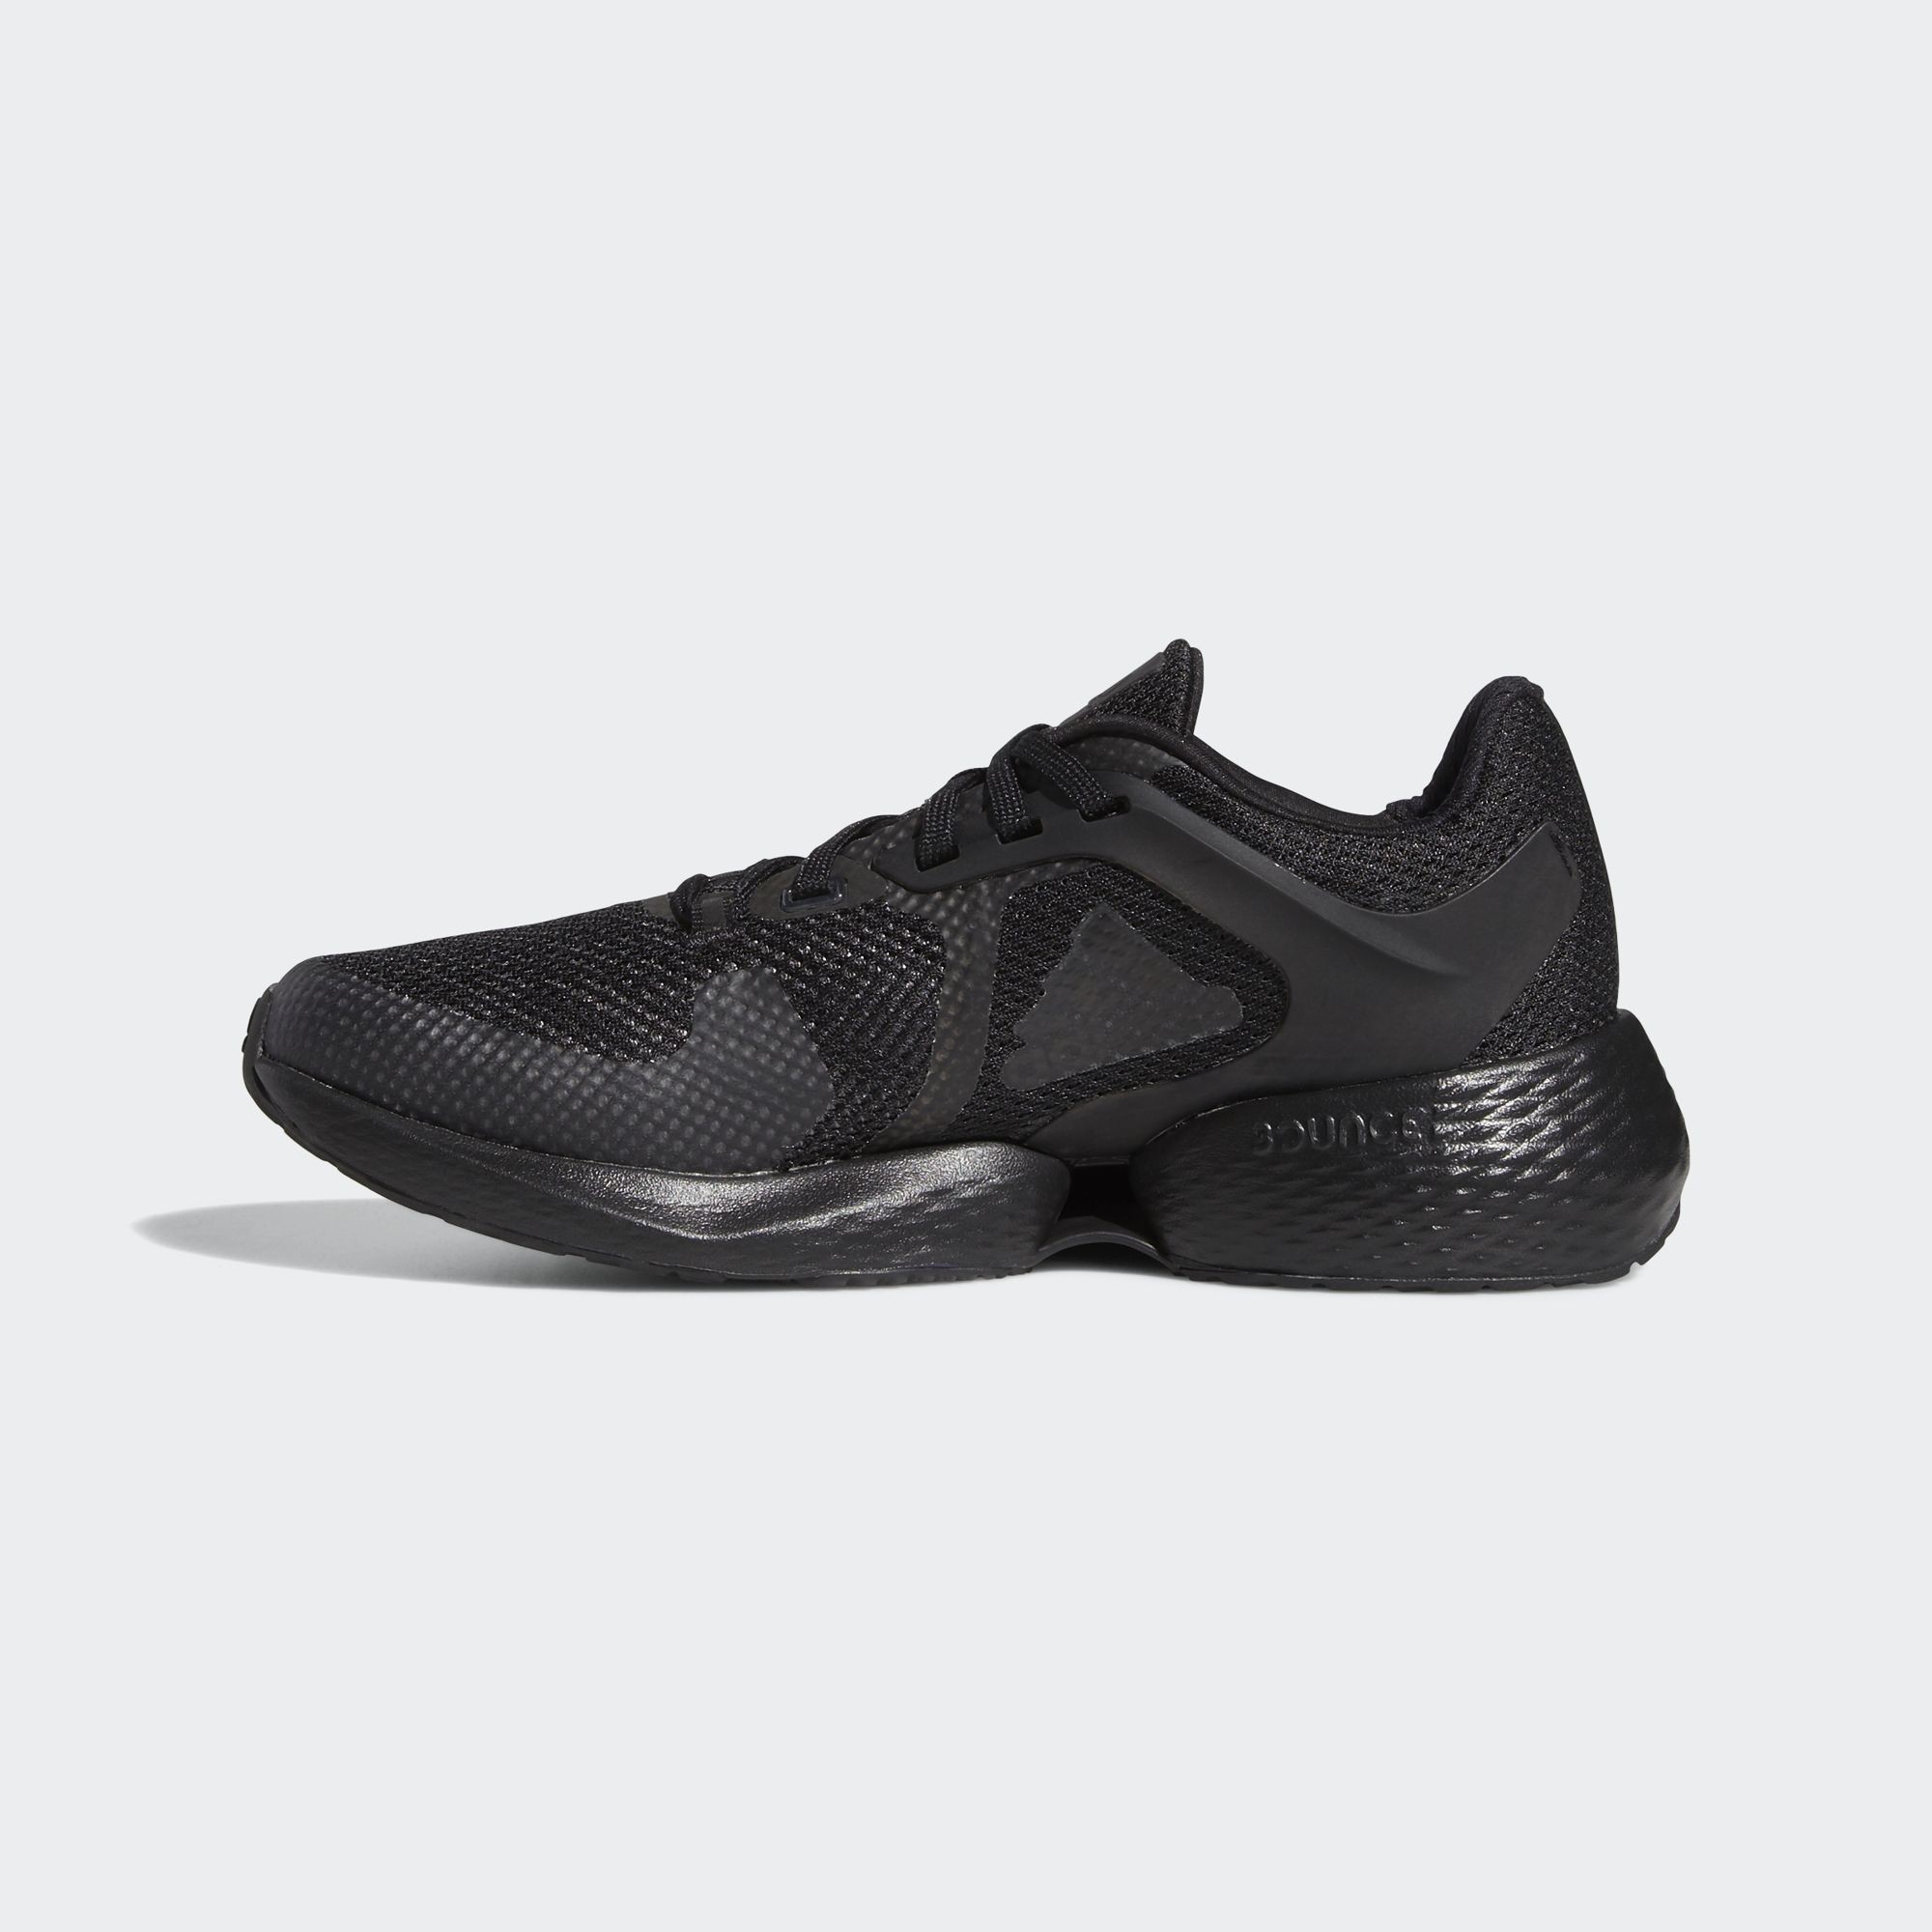 Giày adidas RUNNING Alphatorsion 360 Nữ Màu đen FV7862